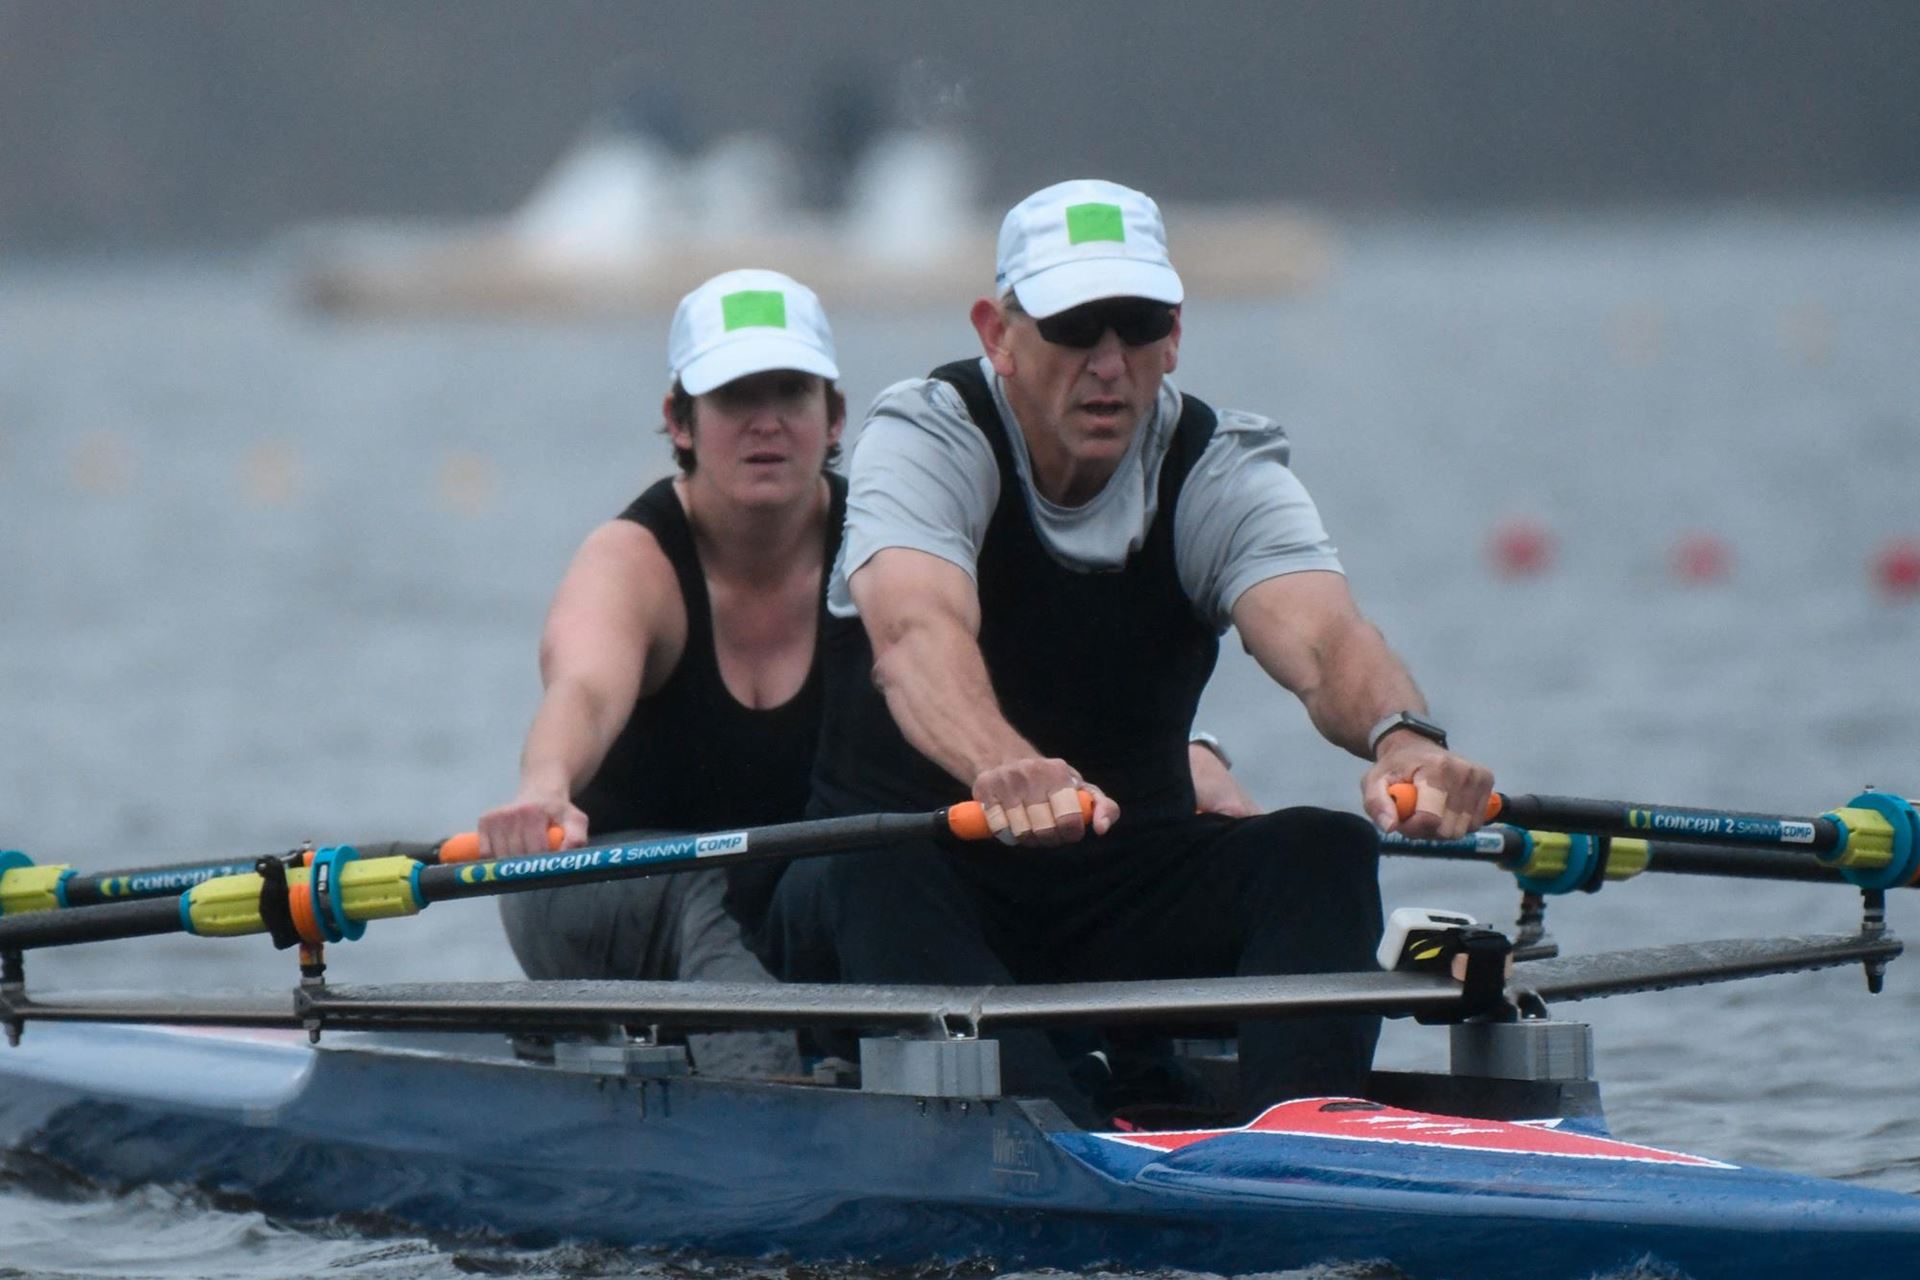 Russell Gernaat and Laura Goodkind rowing. US Rowing image.